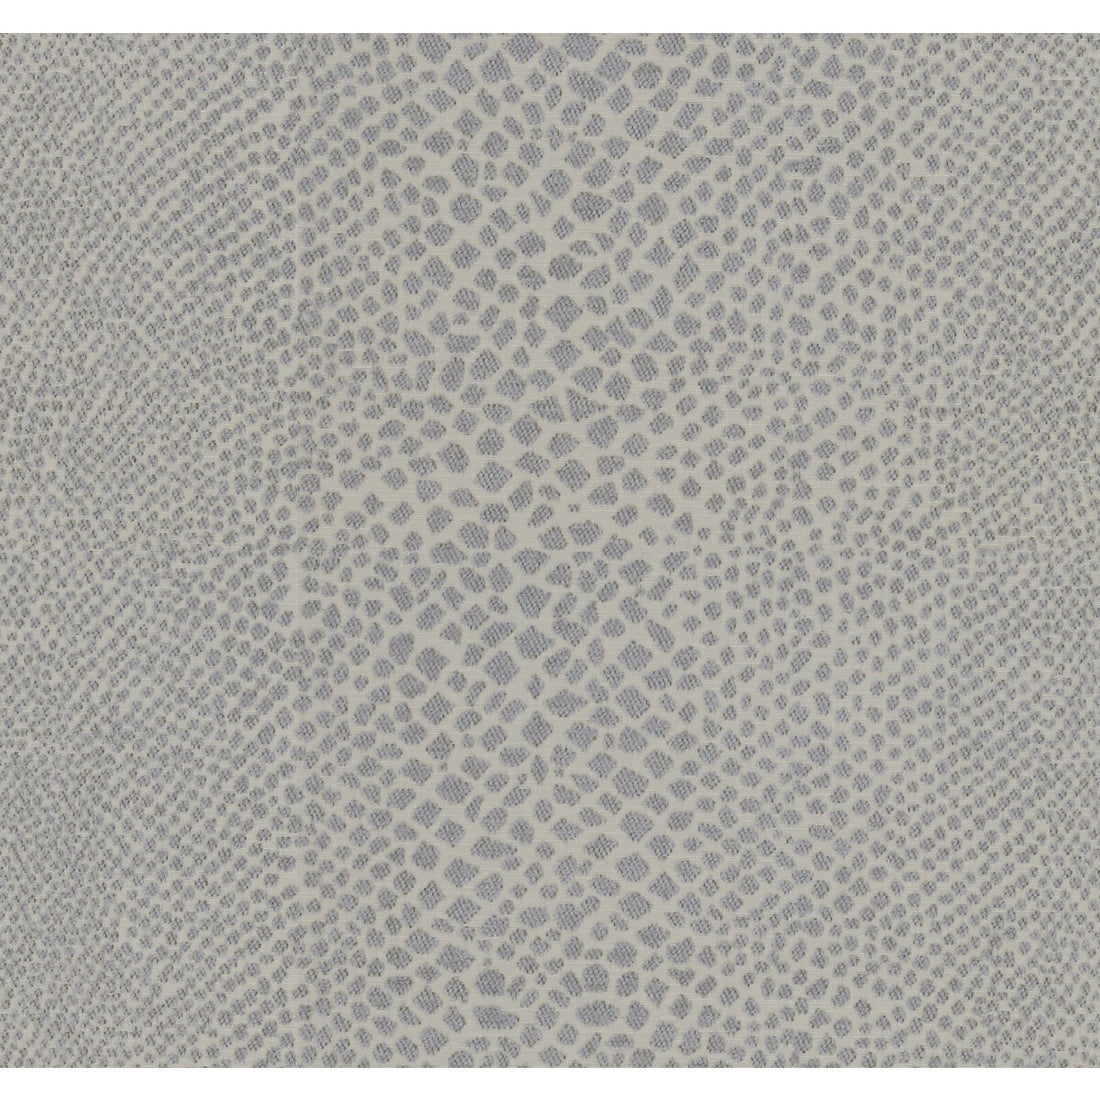 Kravet Smart fabric in 34321-1611 color - pattern 34321.1611.0 - by Kravet Smart